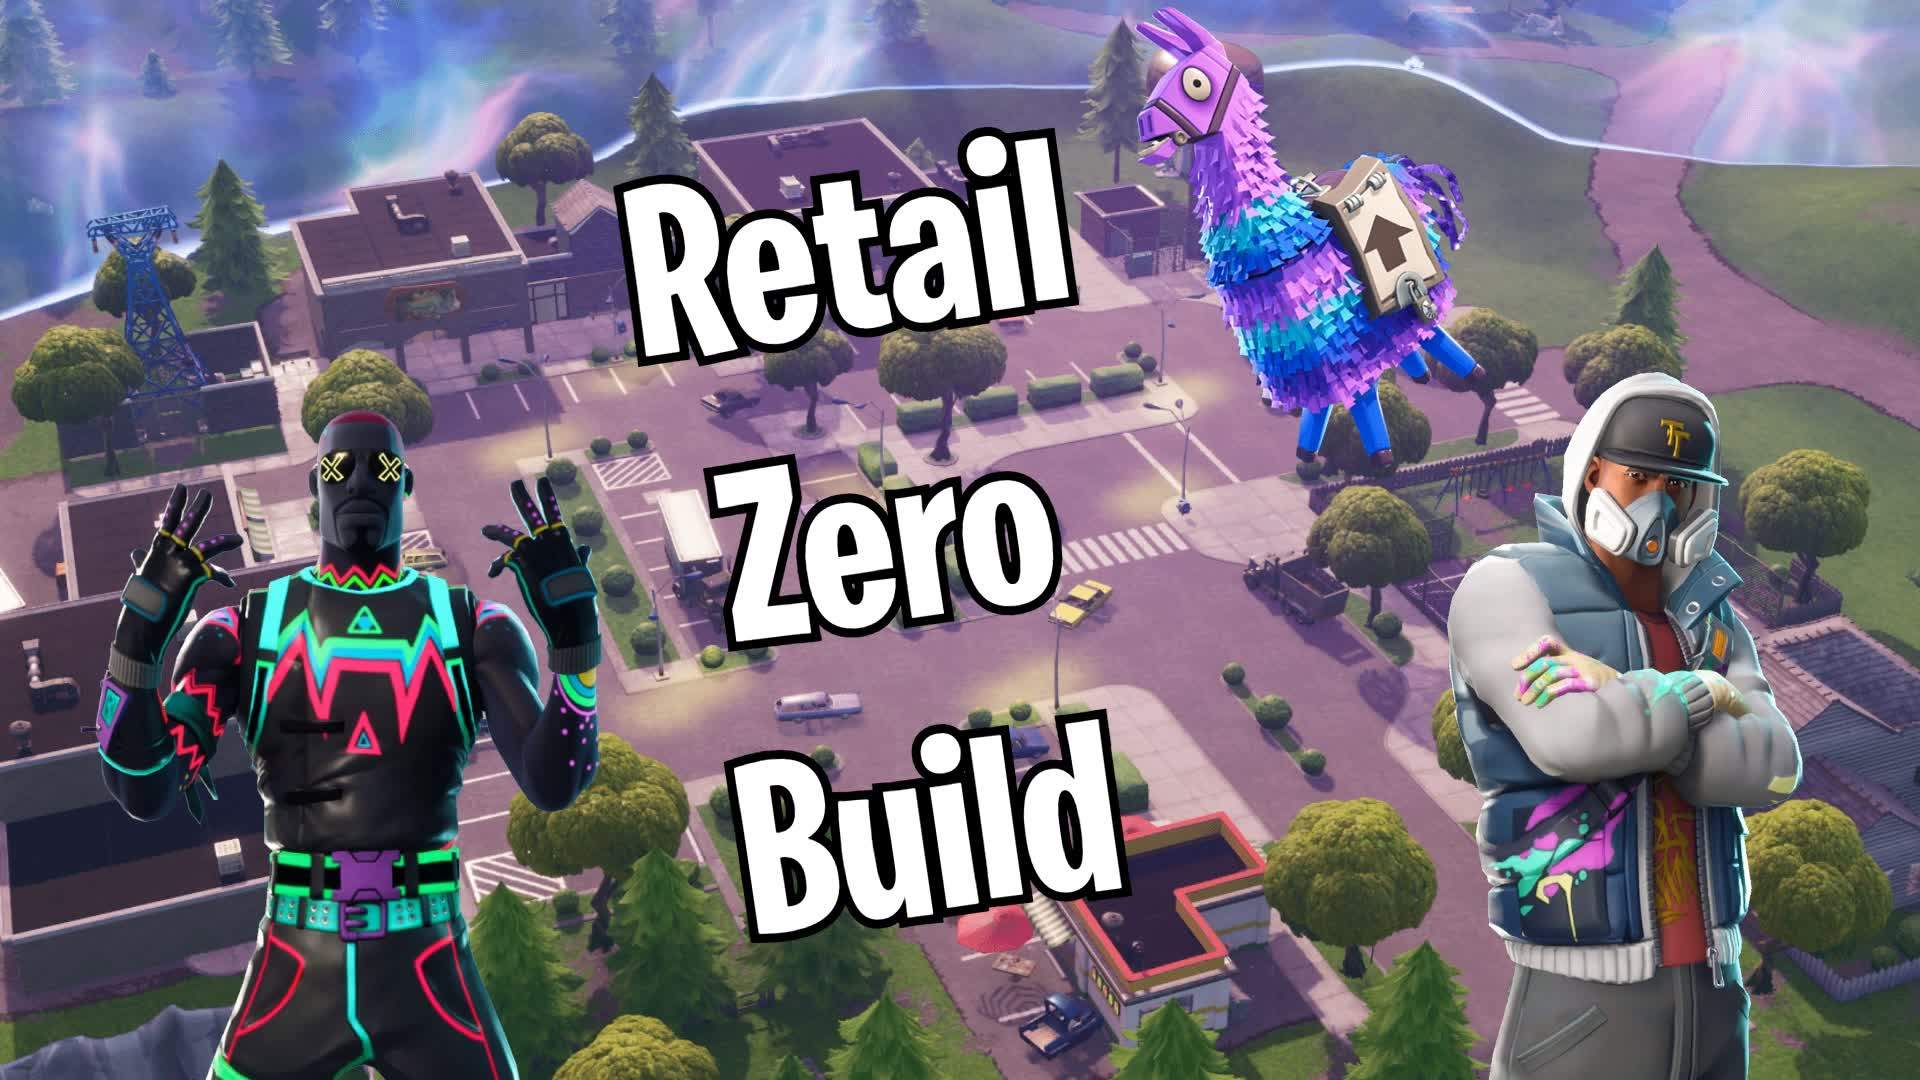 Retail Zero Build